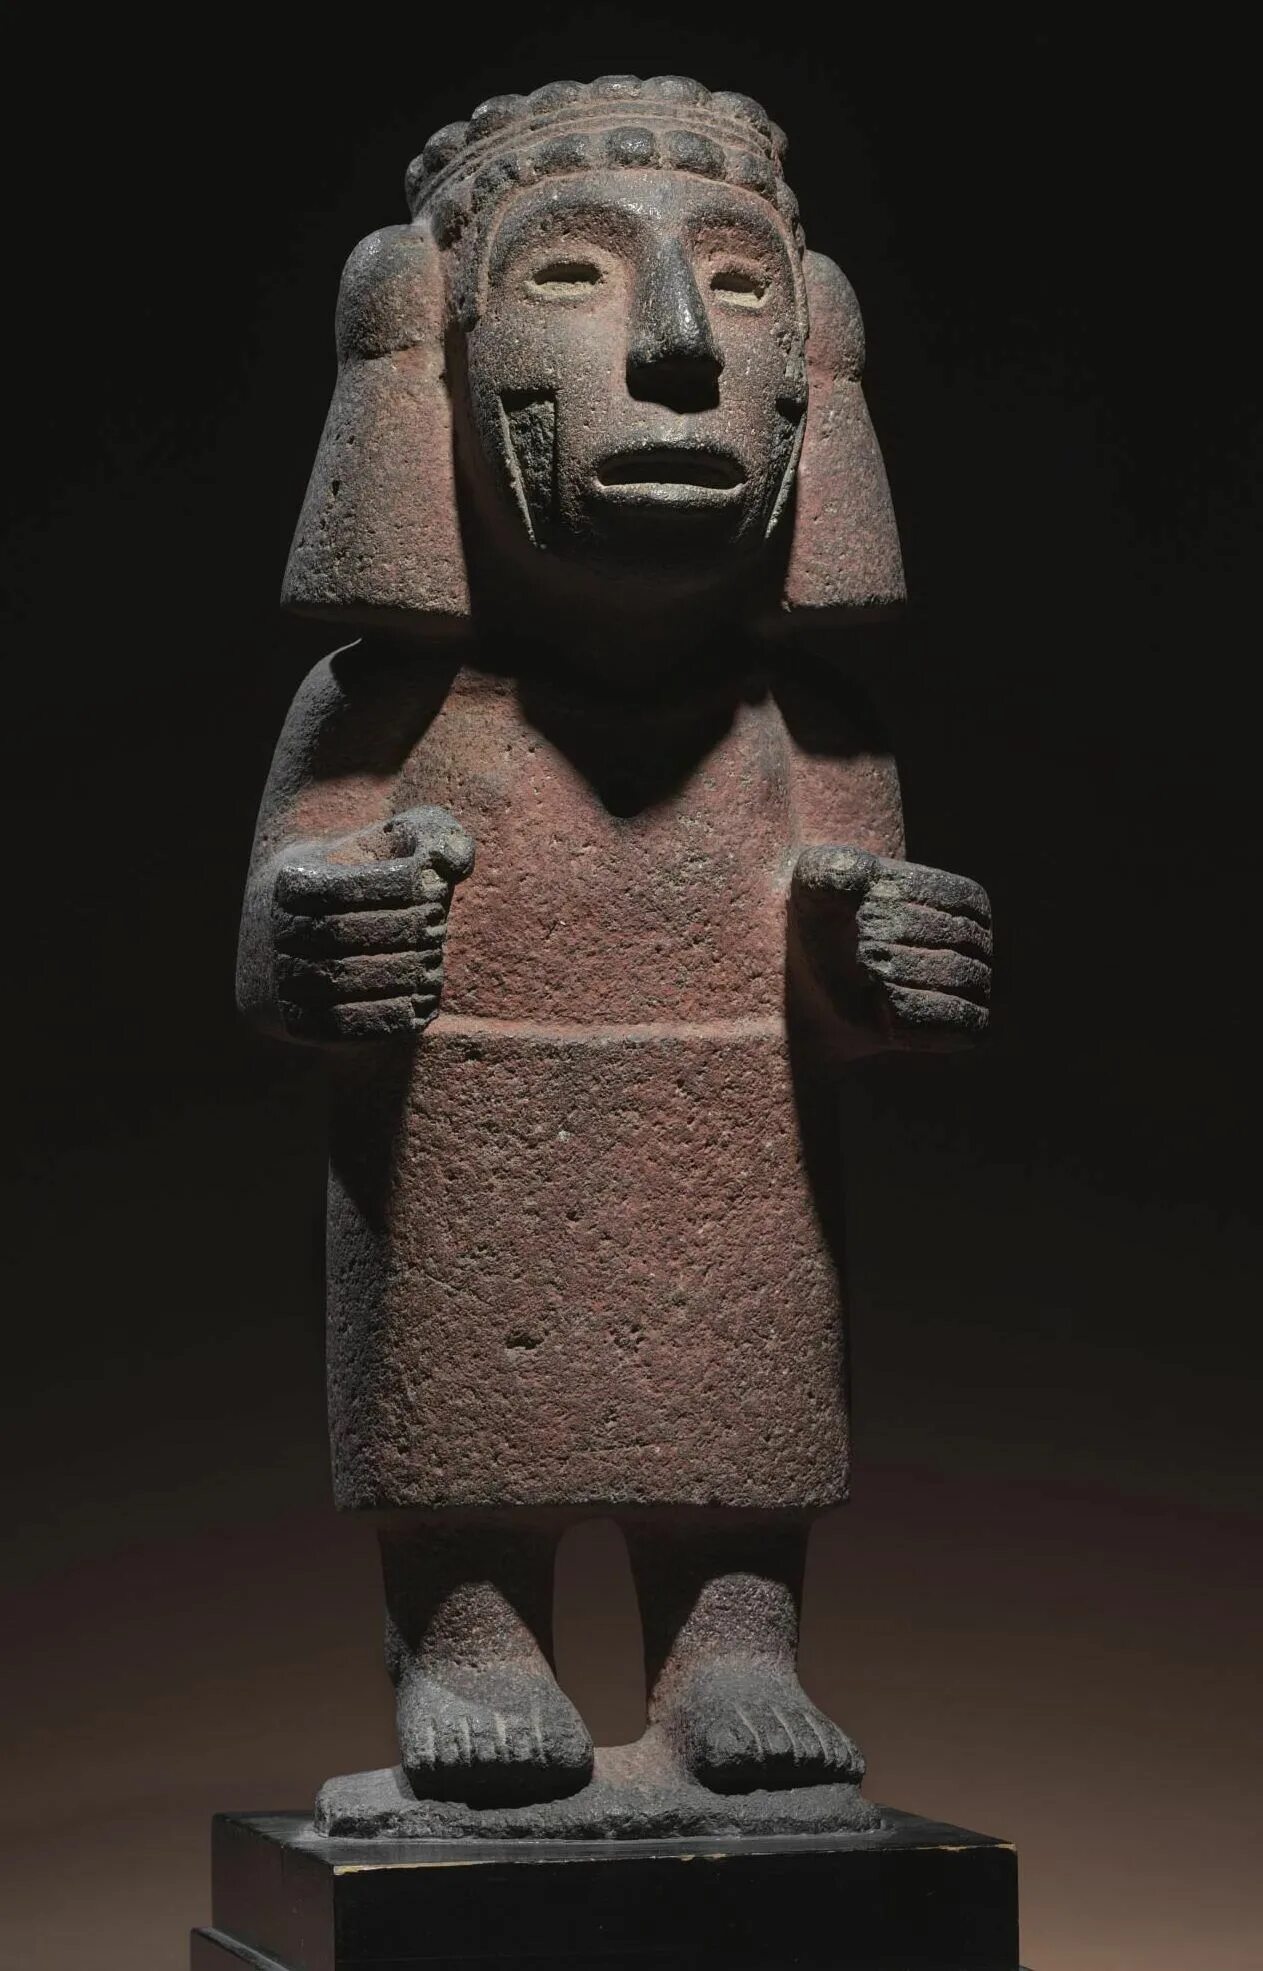 Статуи ацтеков Майя Ягуар. Статуя Коатликуэ. Статуя Коатликуэ Ацтеки. Каменные скульптуры ацтеков. Древнейшая монументальная культовая скульптура